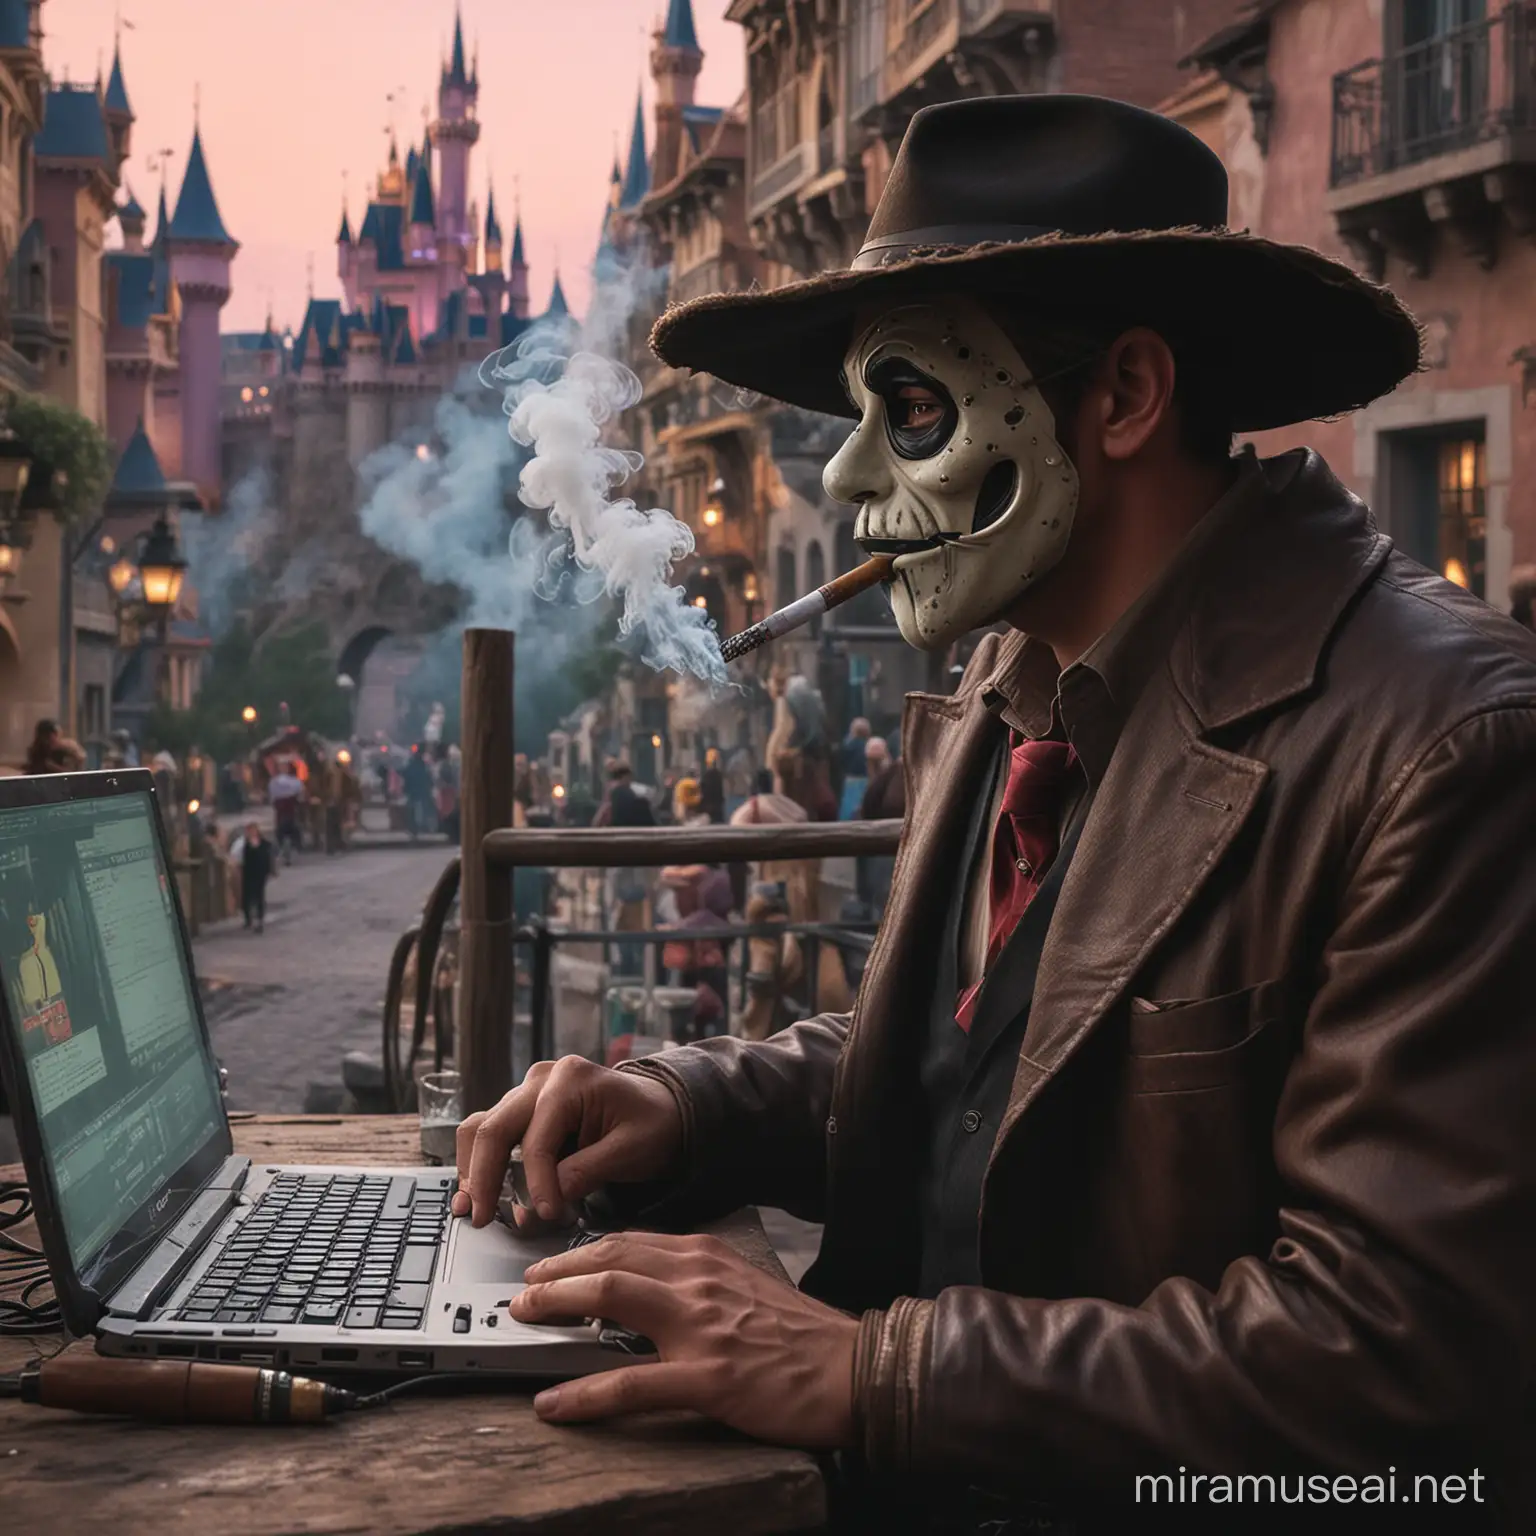 Cybersecurity Expert Smoking Cigar amidst Disney Scenery